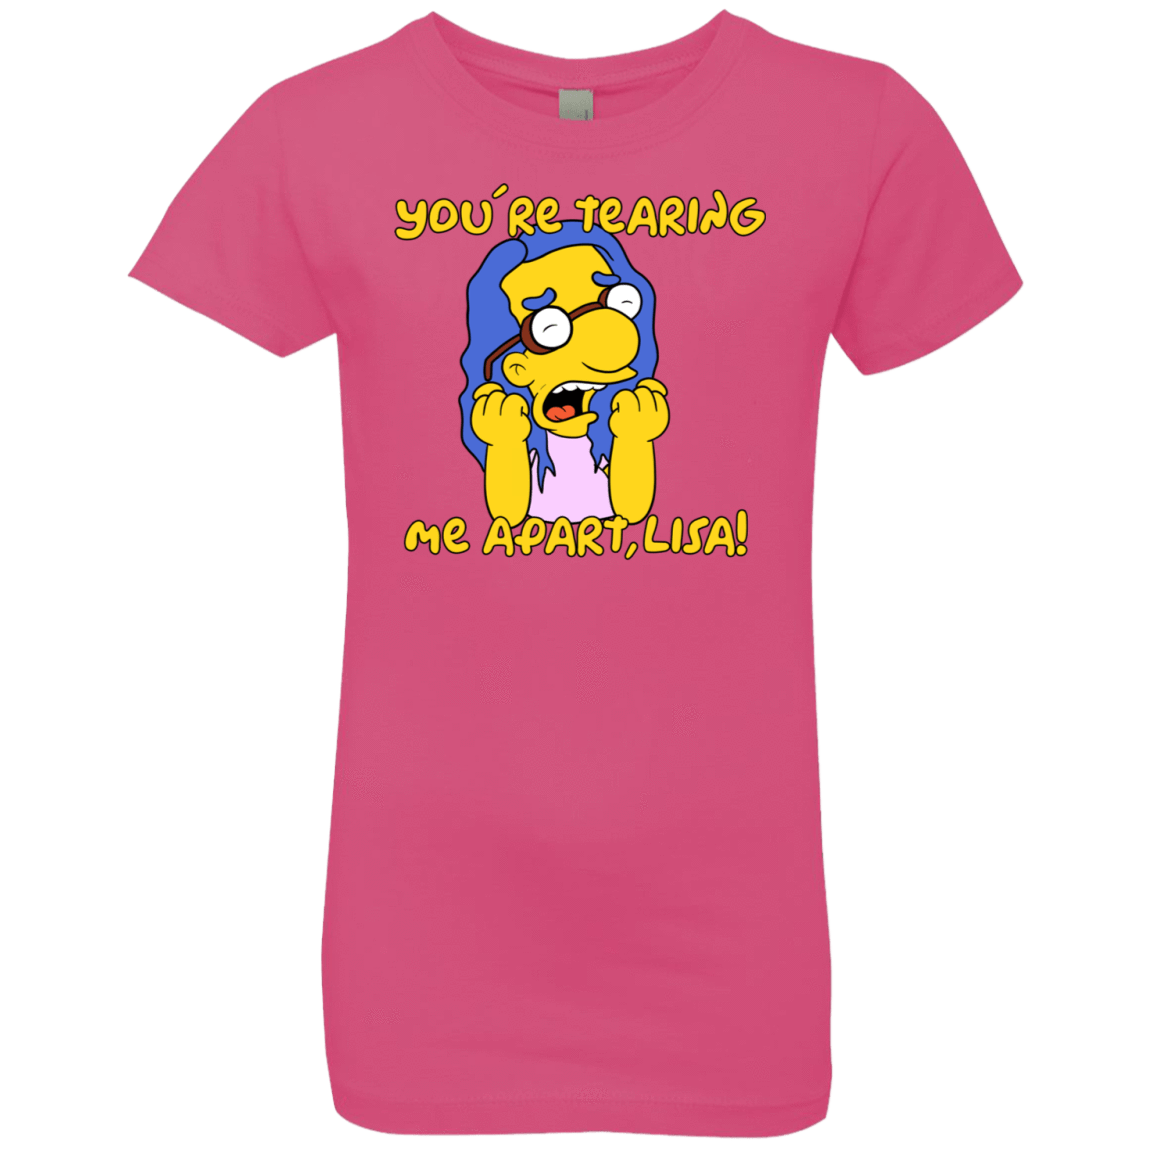 T-Shirts Hot Pink / YXS Milhouse Wiseau Girls Premium T-Shirt